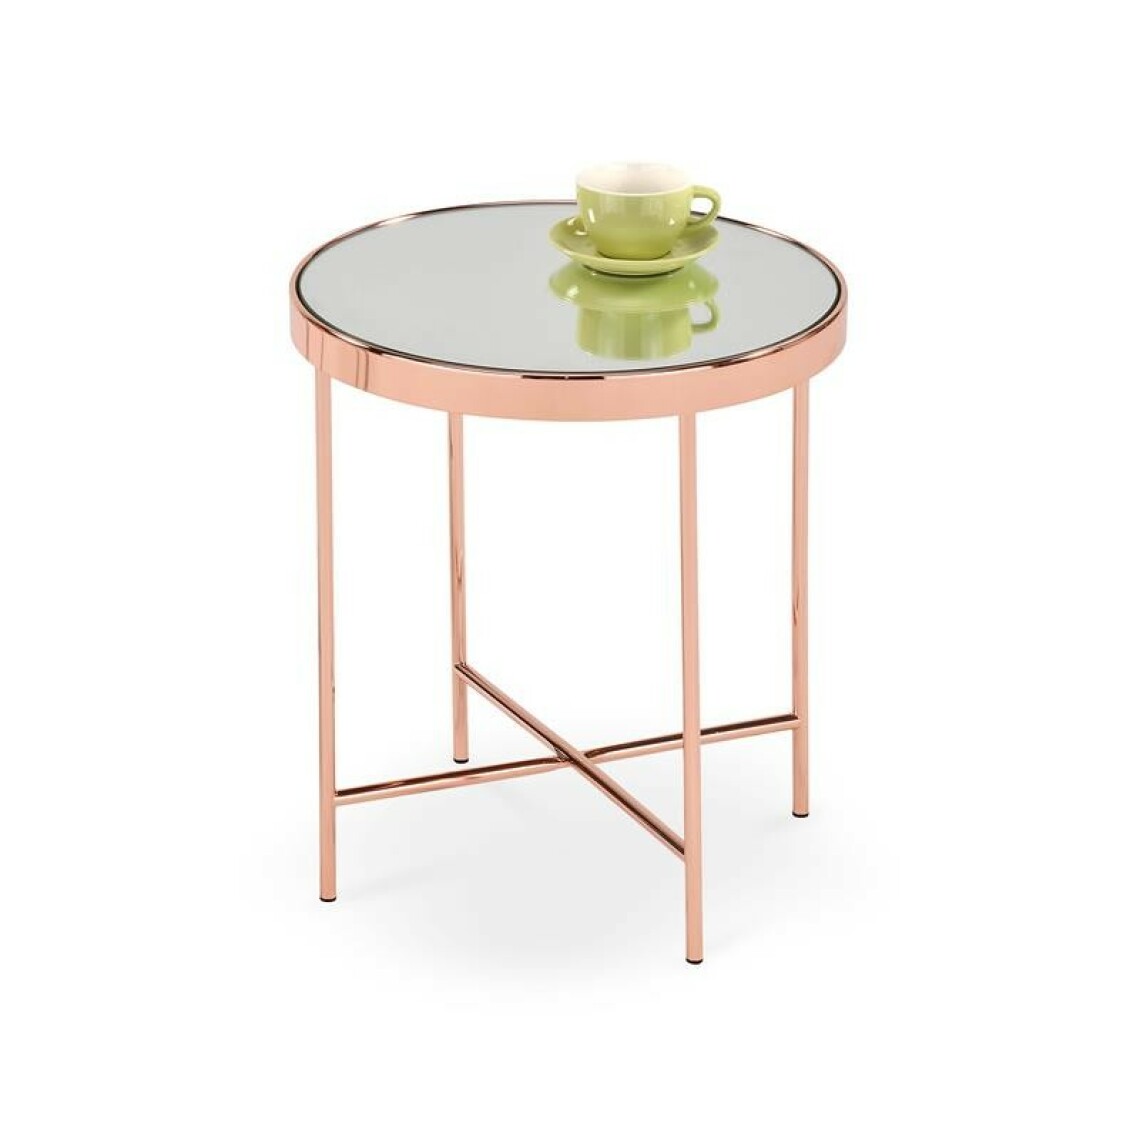 Carellia - Table basse ronde design - Cuivre - Tables basses